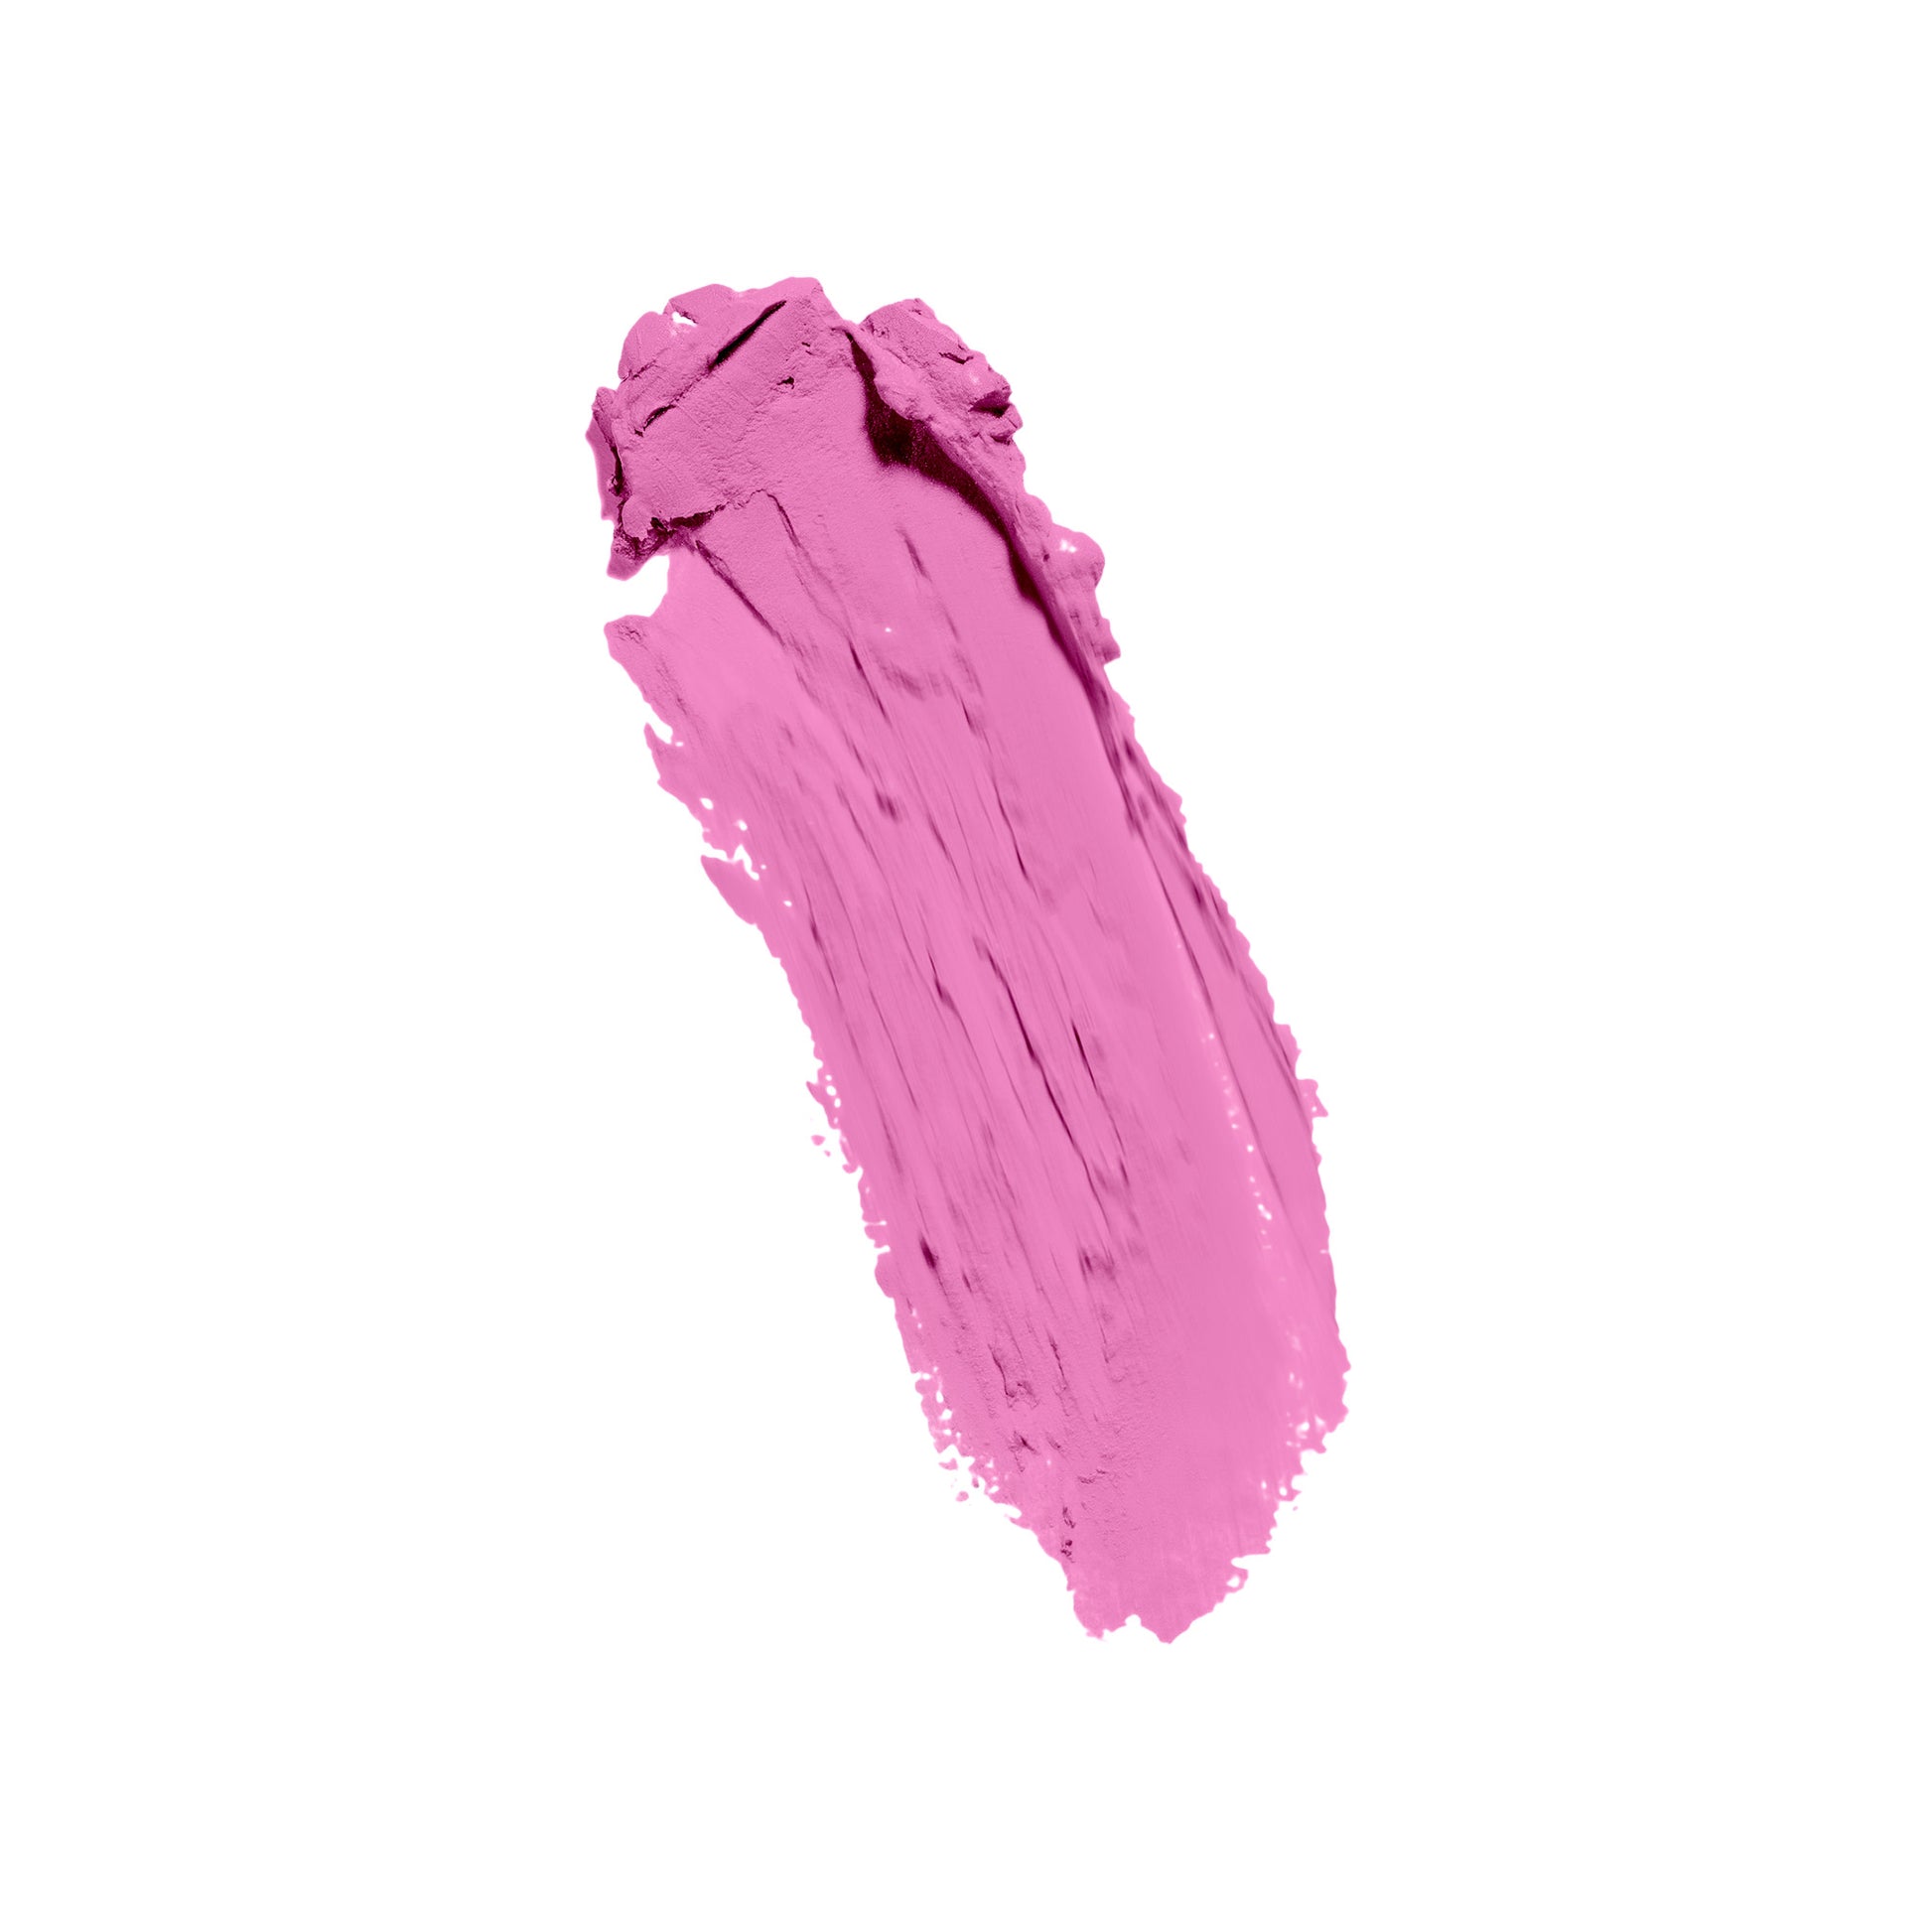 NXTE NXTEssence Grape Lip Stick Swatch Color